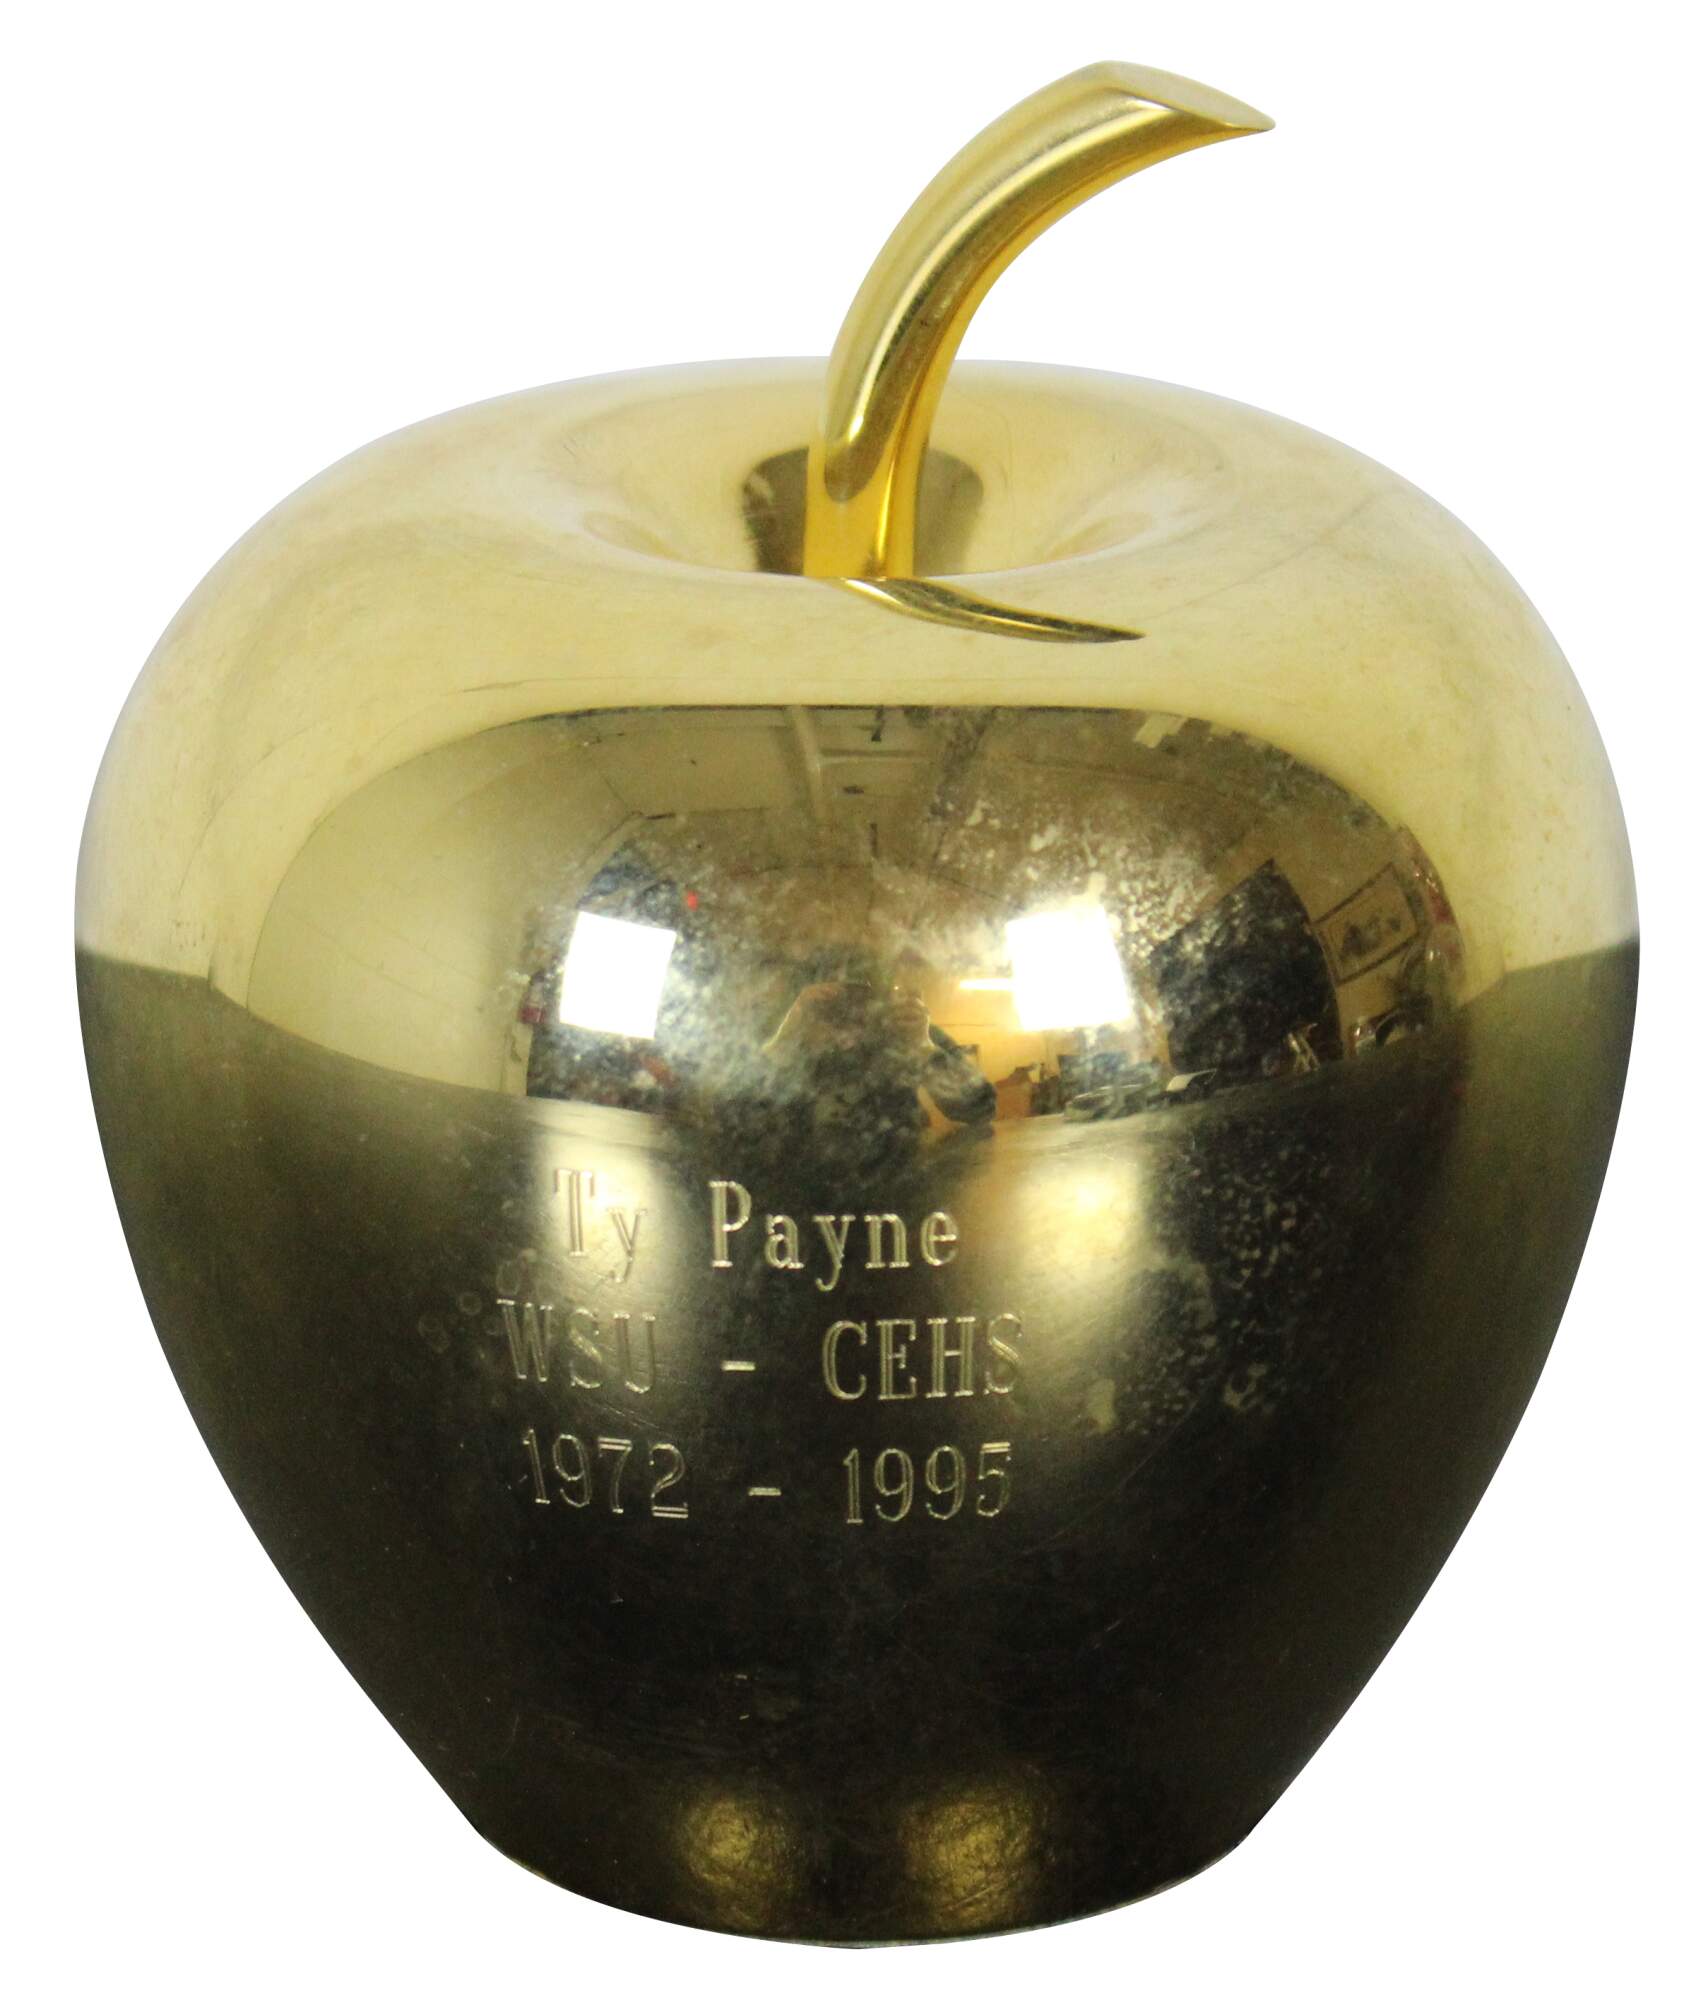 vintage brass apple